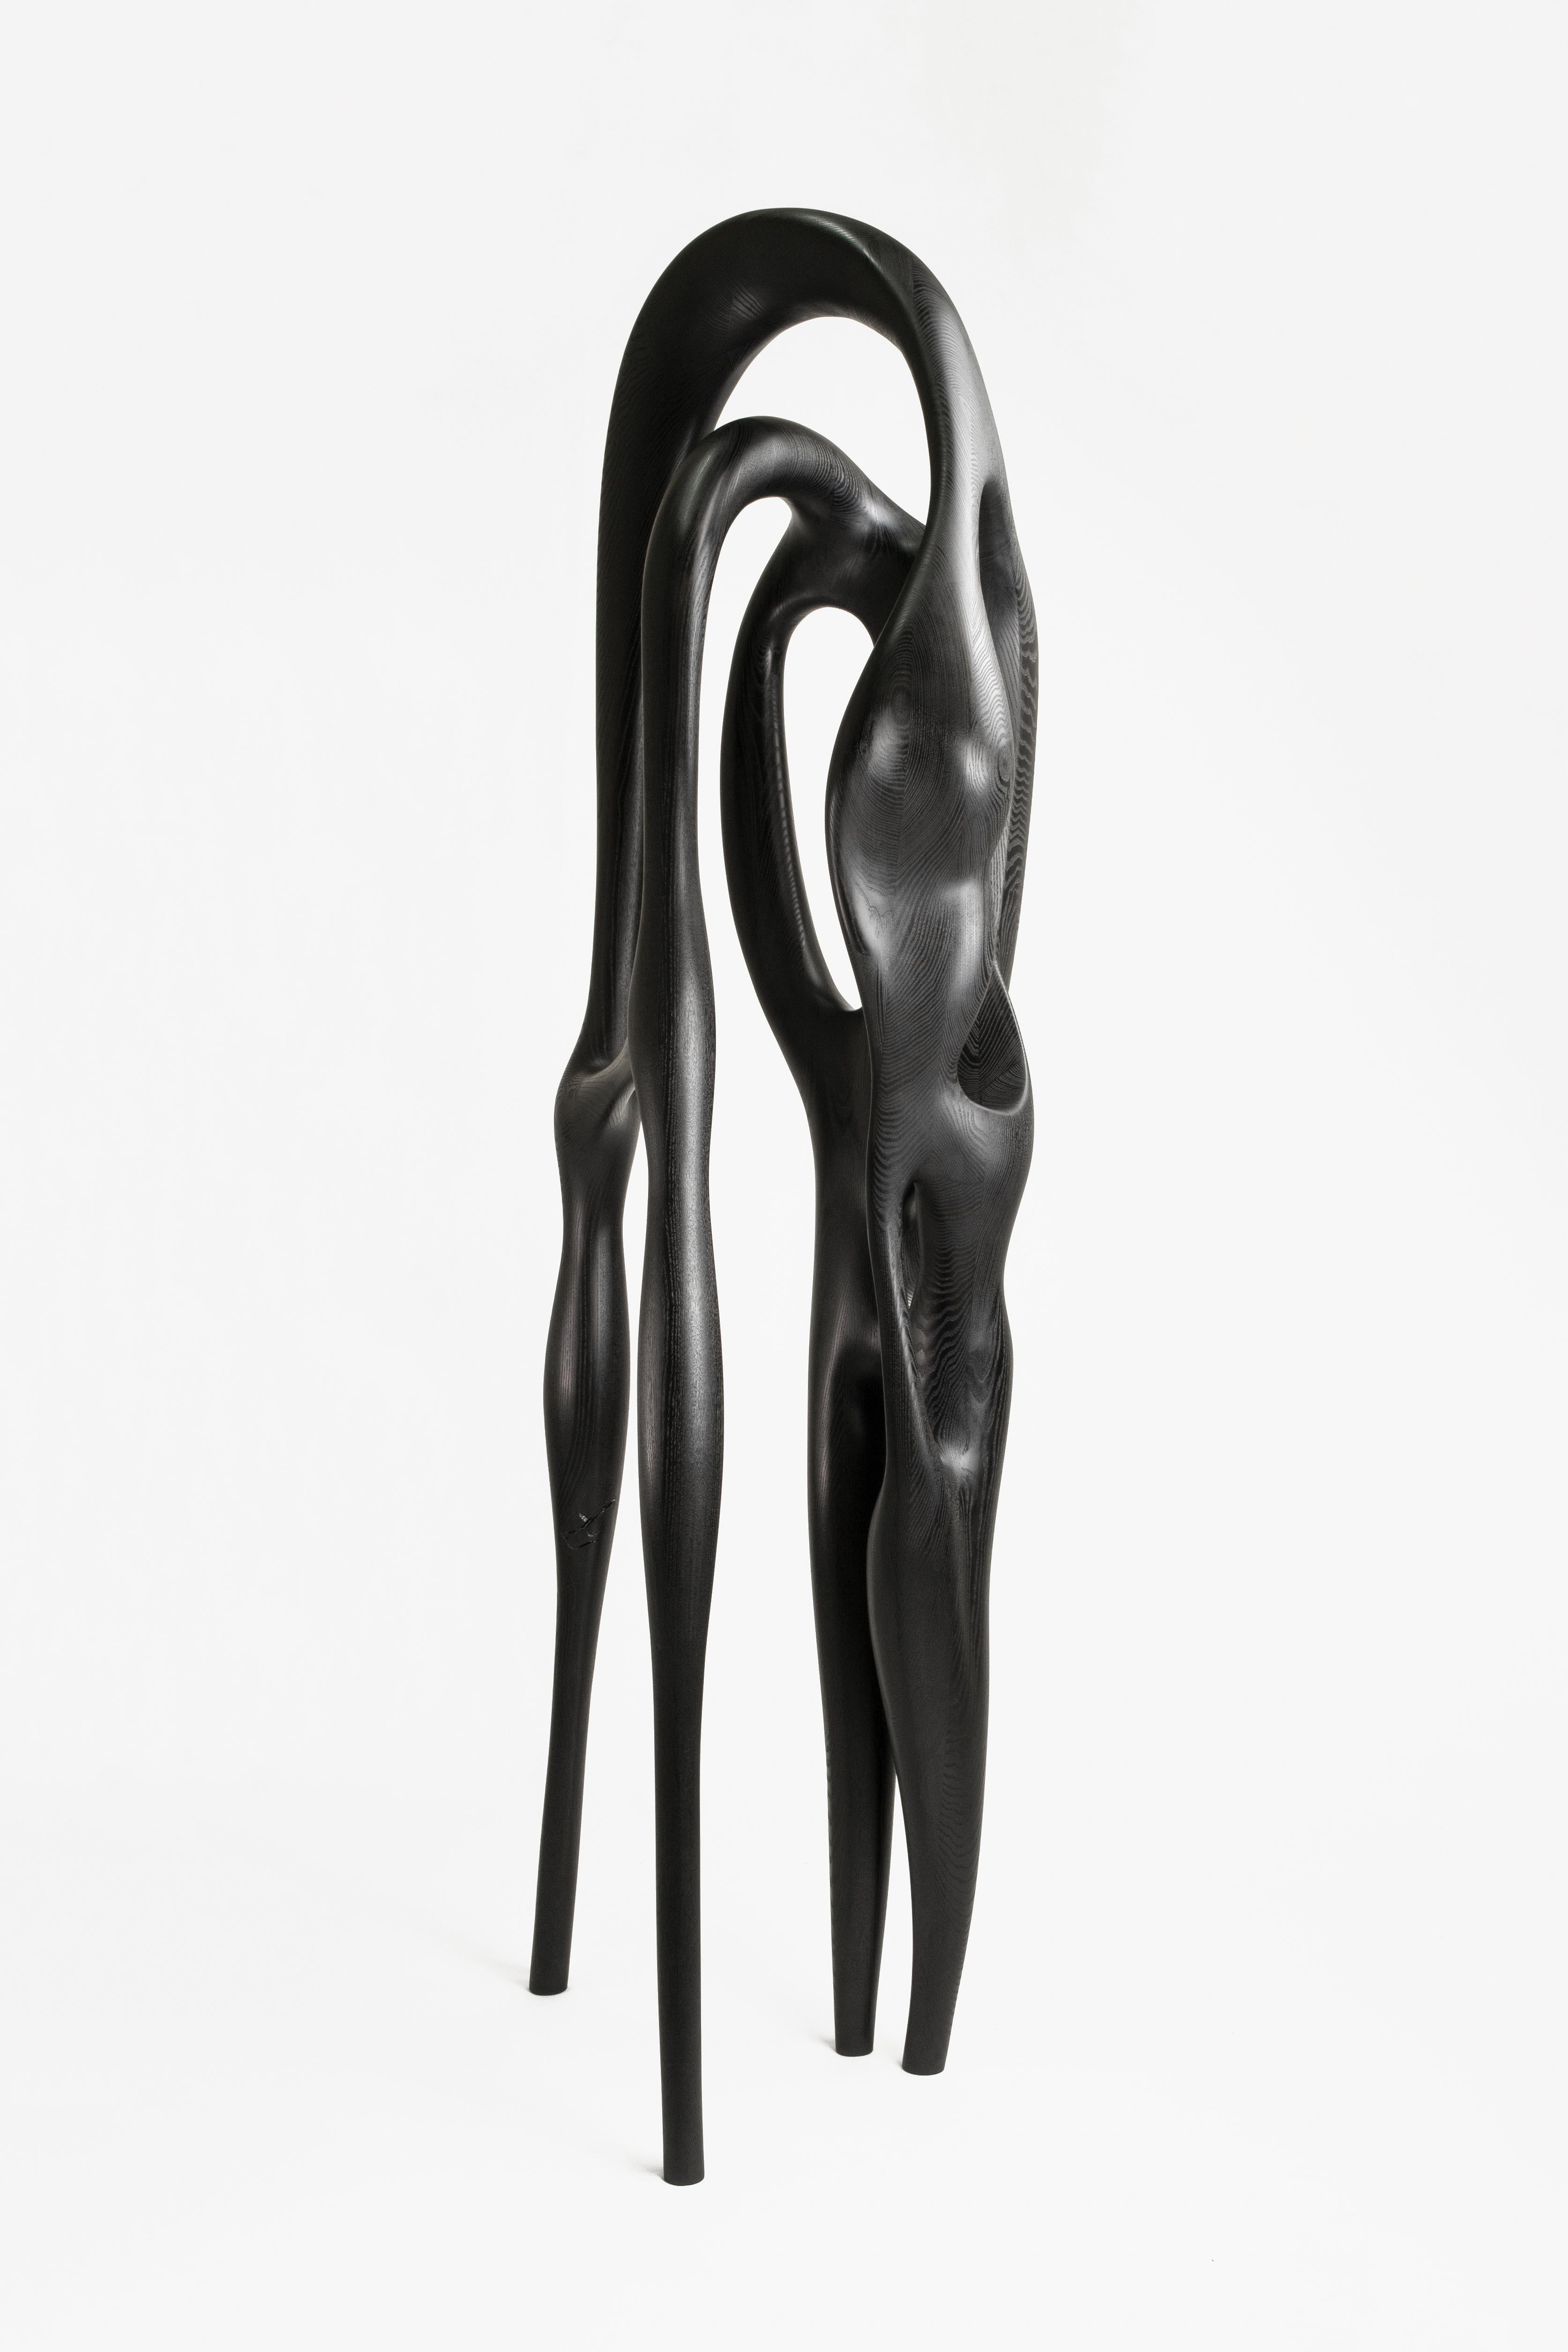 Drift Sculpture No 2 Hand-Sculpted by Maxime Goléo For Sale 2